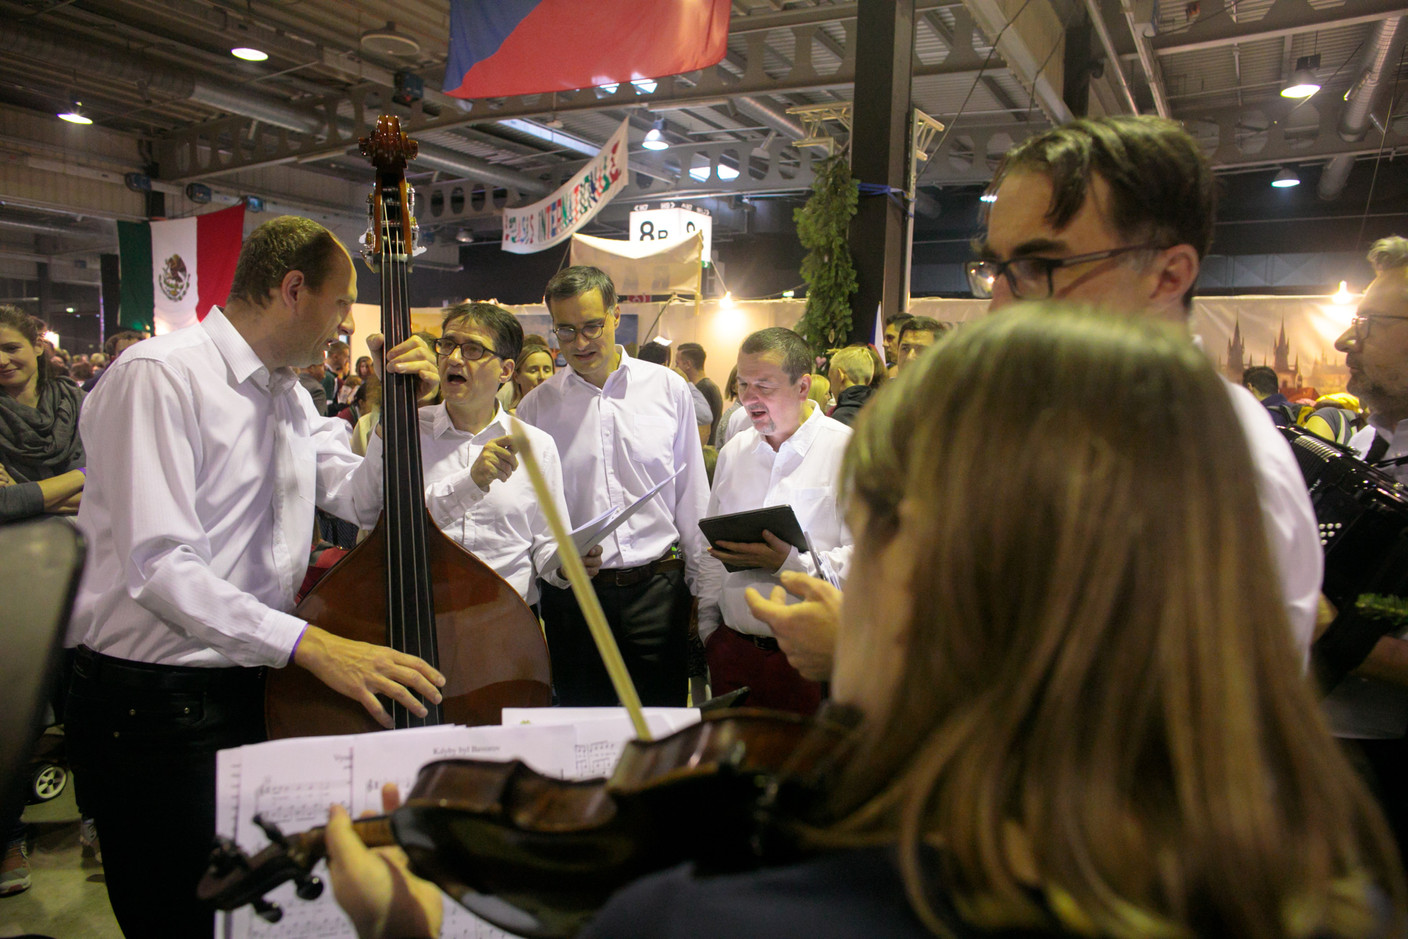 Musicians perform at the Bazar International. Matic Zorman / Maison Moderne